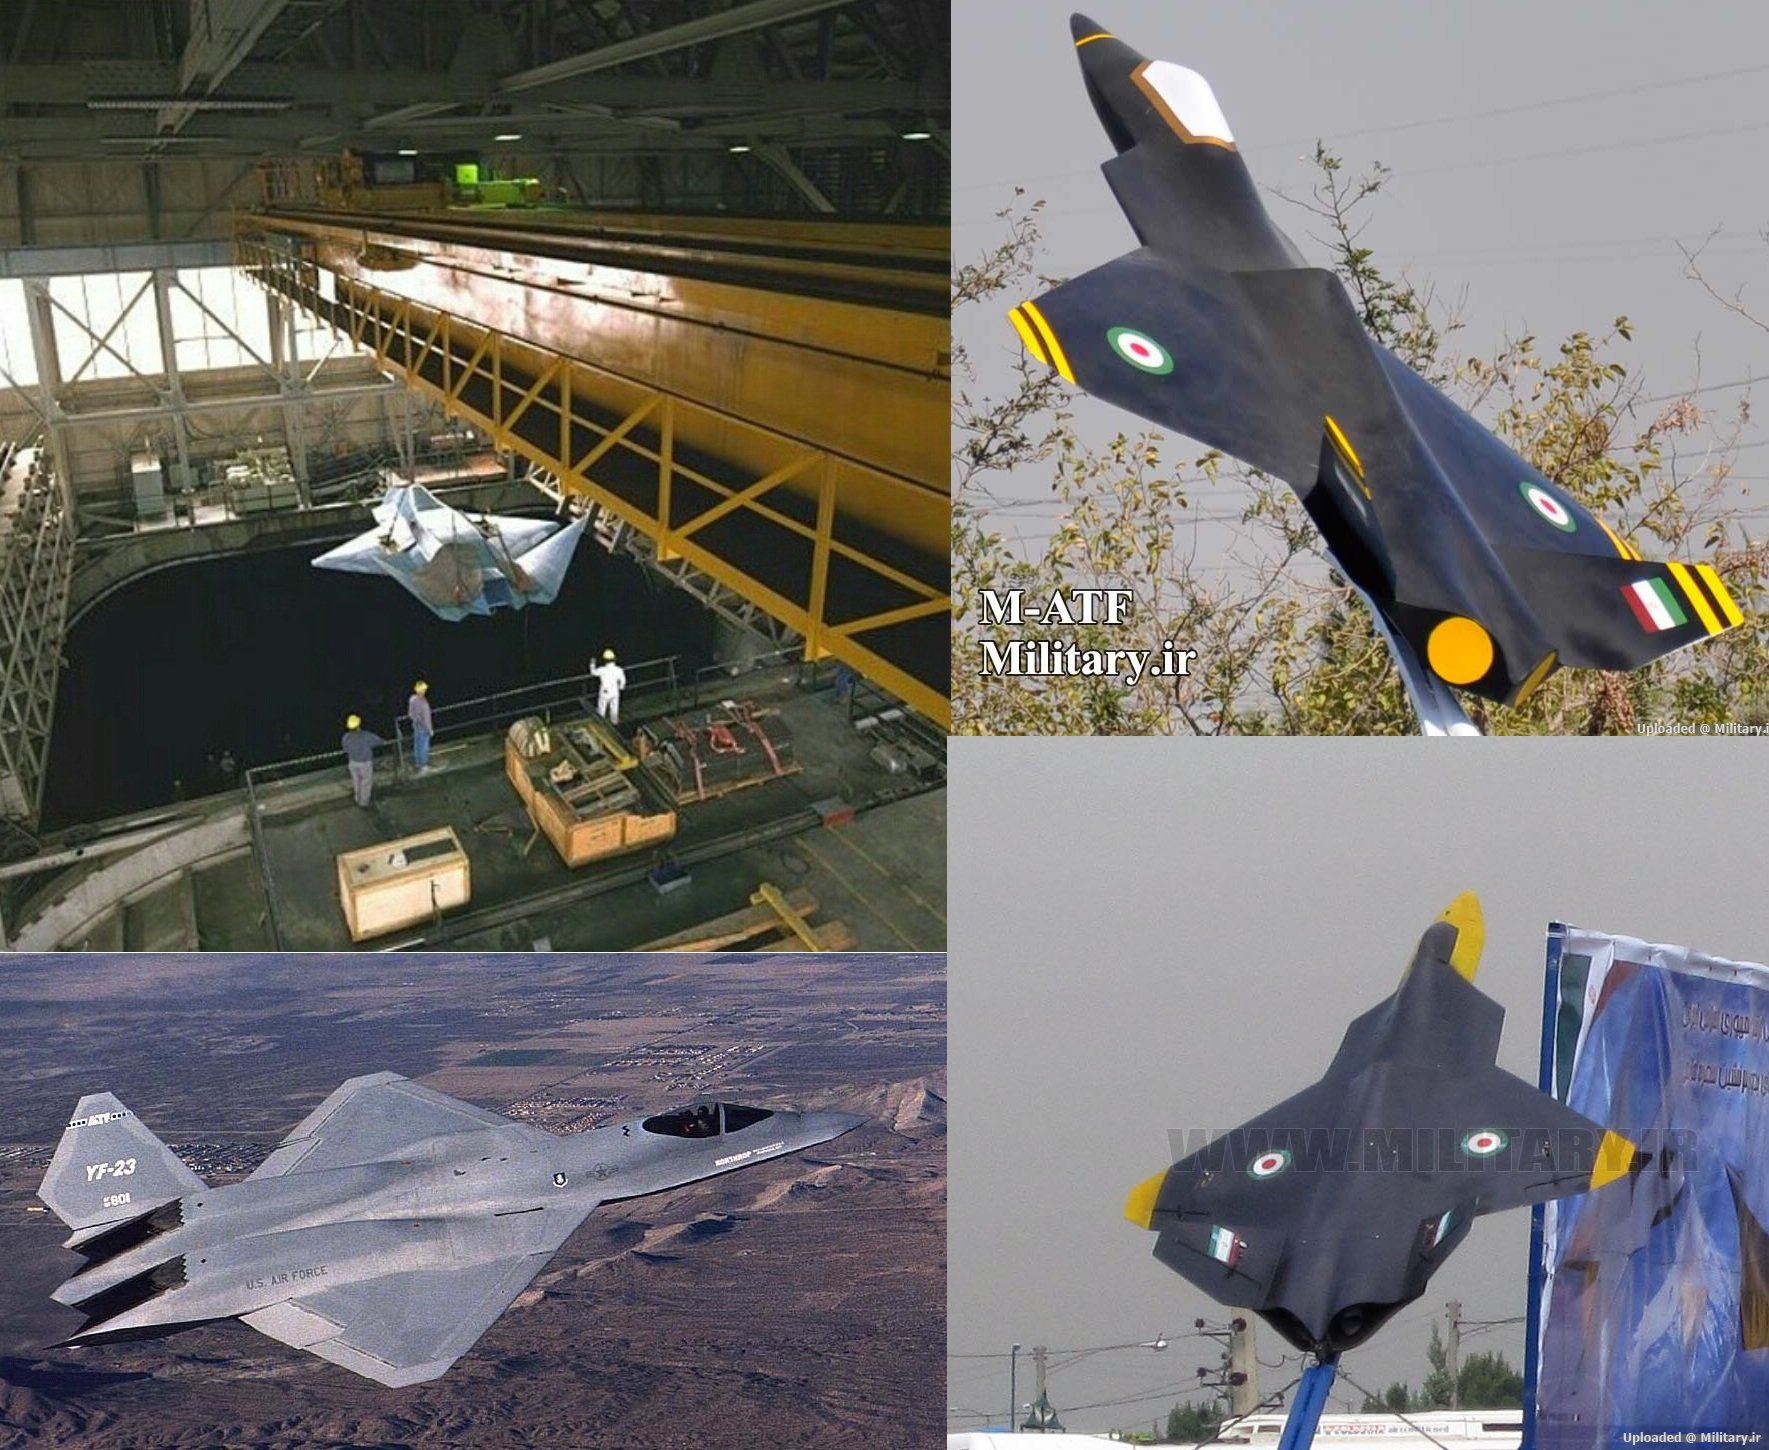 Muckup_vs_yf-23___Iranian_stealth_jet.jpeg